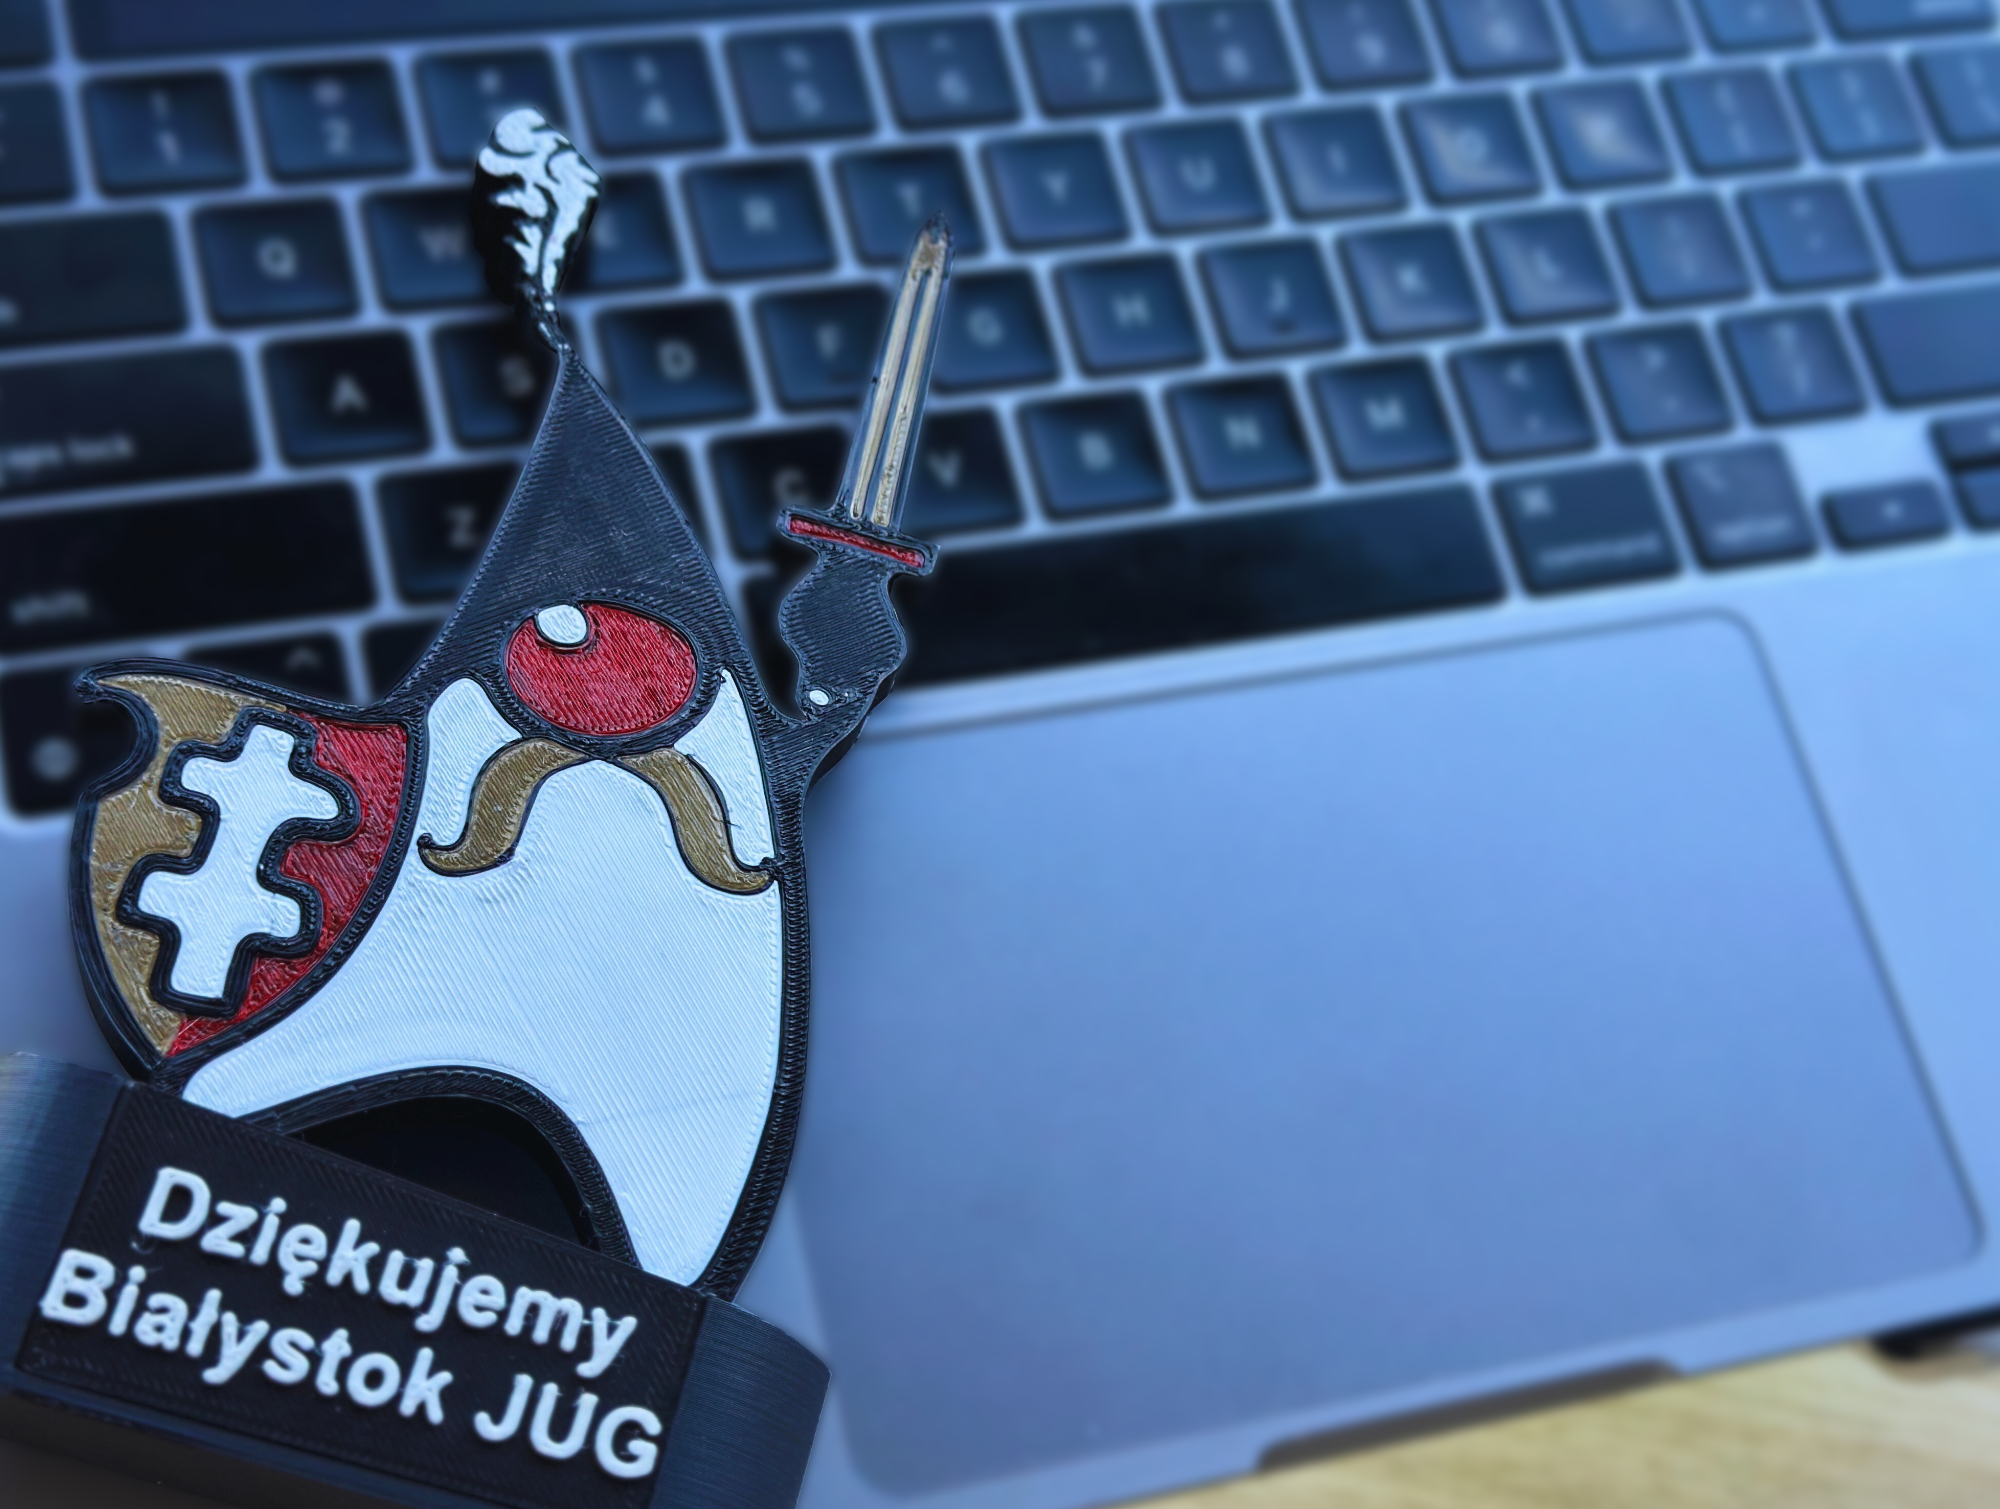 Java User Groups mascot, Duke